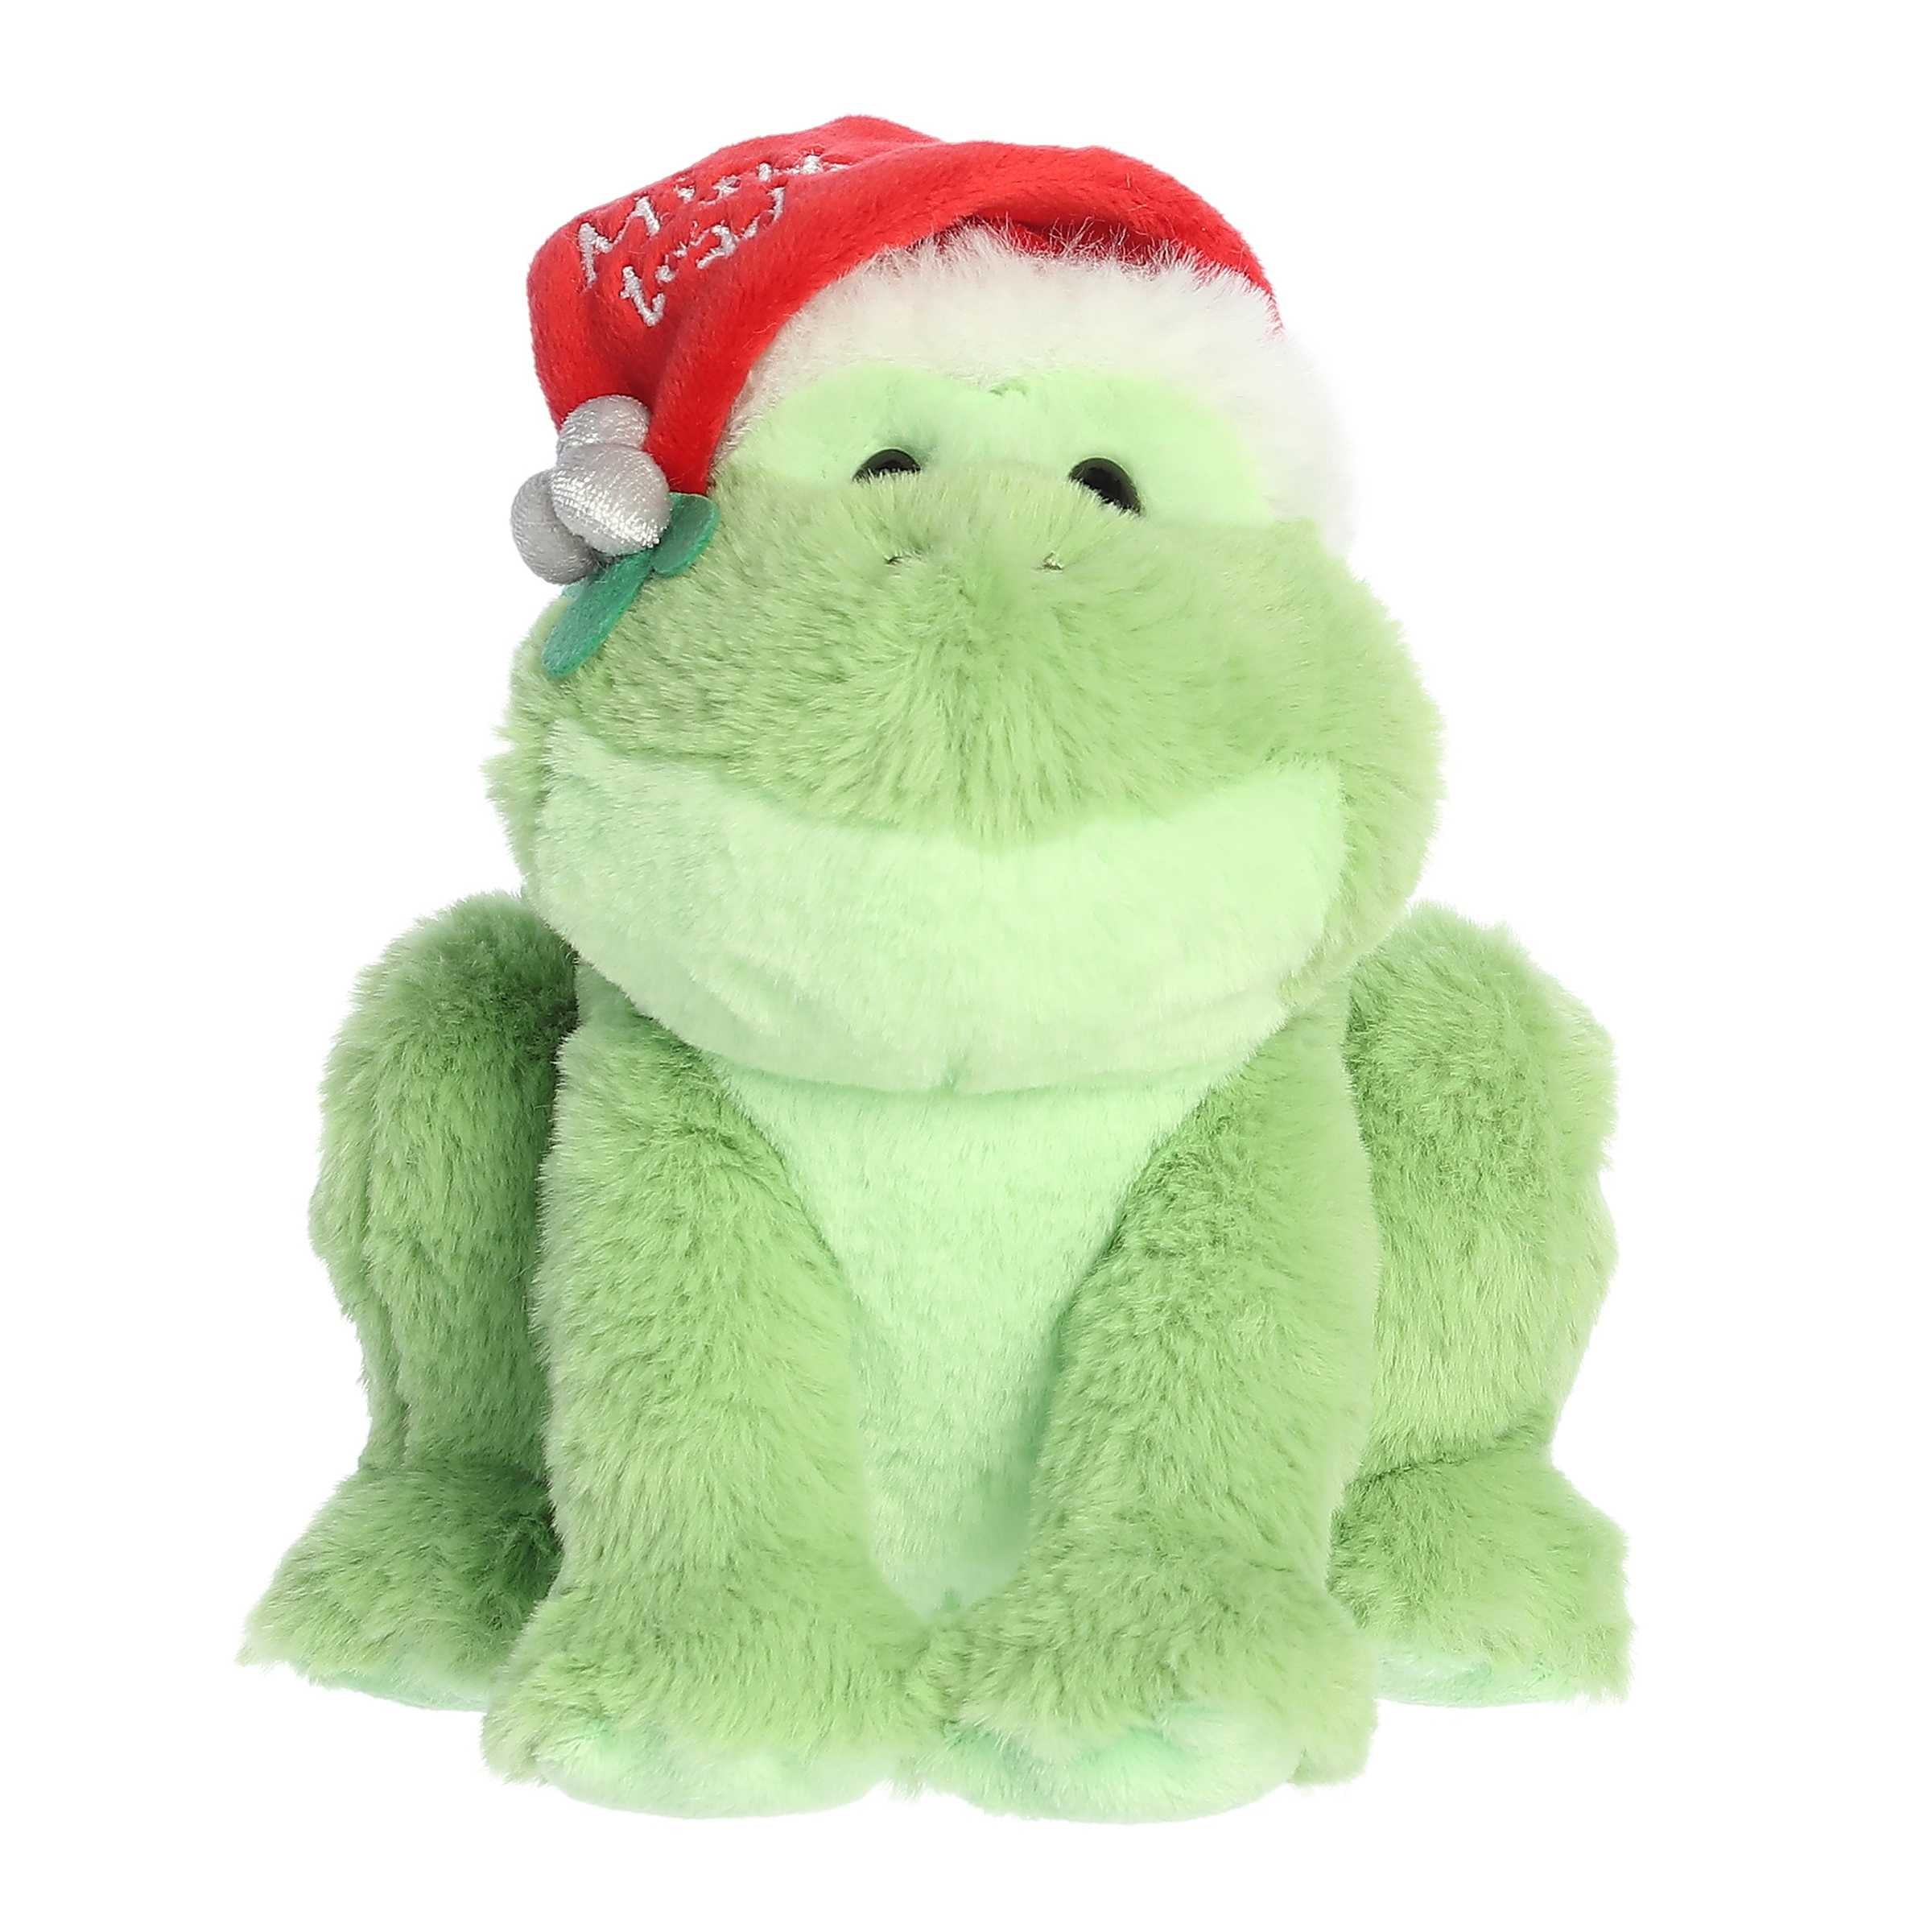 Aurora Small Green Just Sayin' 8 Mistle-Toad Festive Stuffed Animal